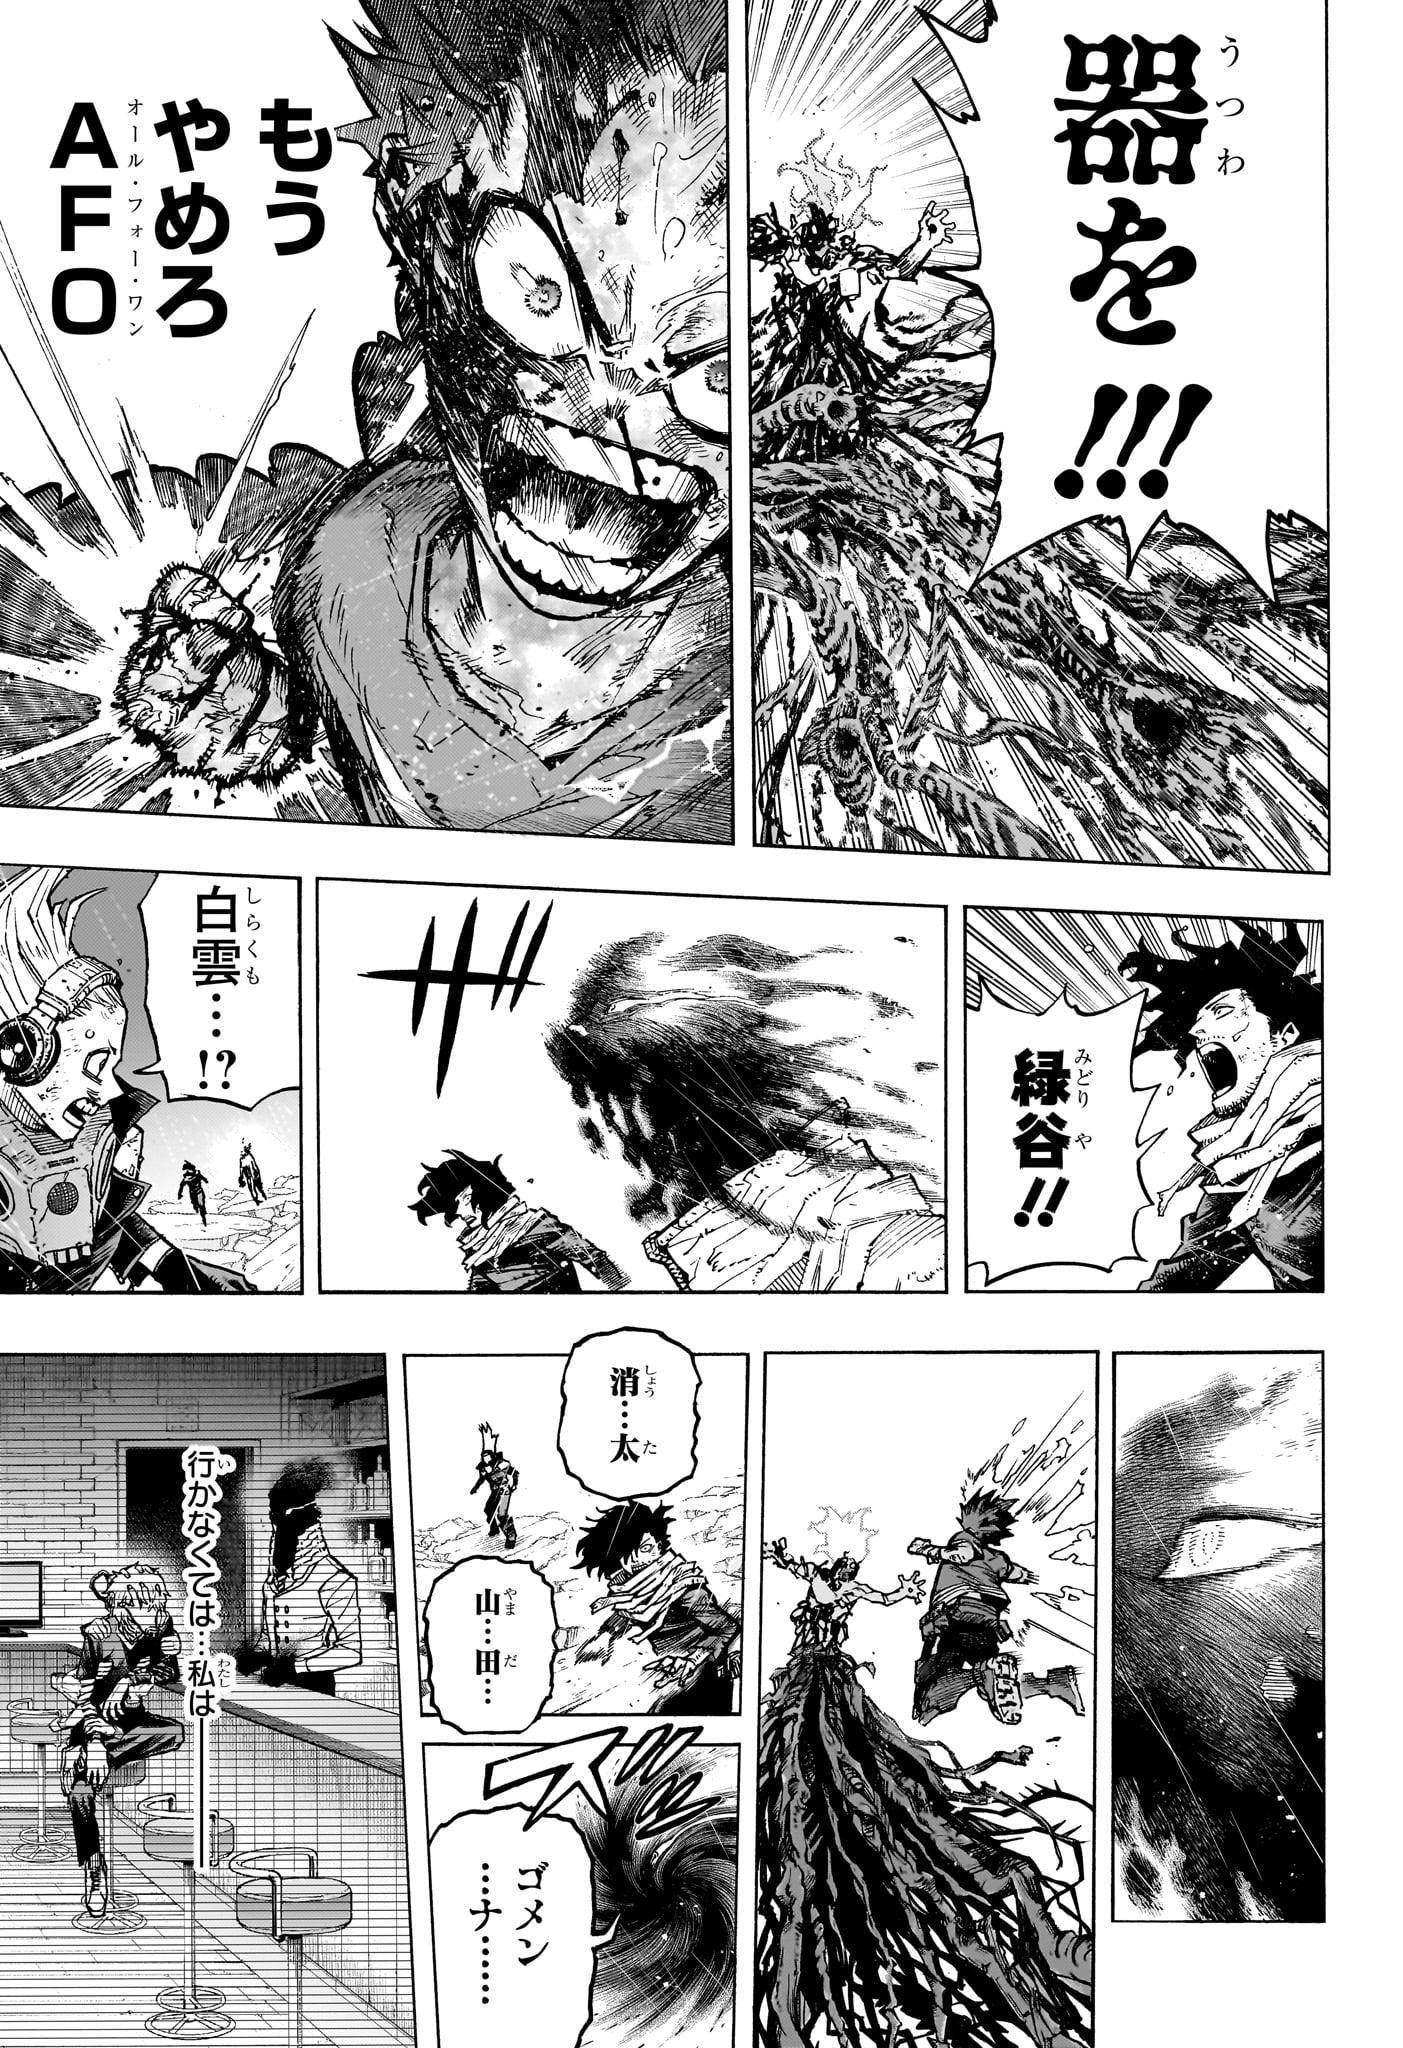 Boku no Hero Academia - Chapter 423 - Page 5